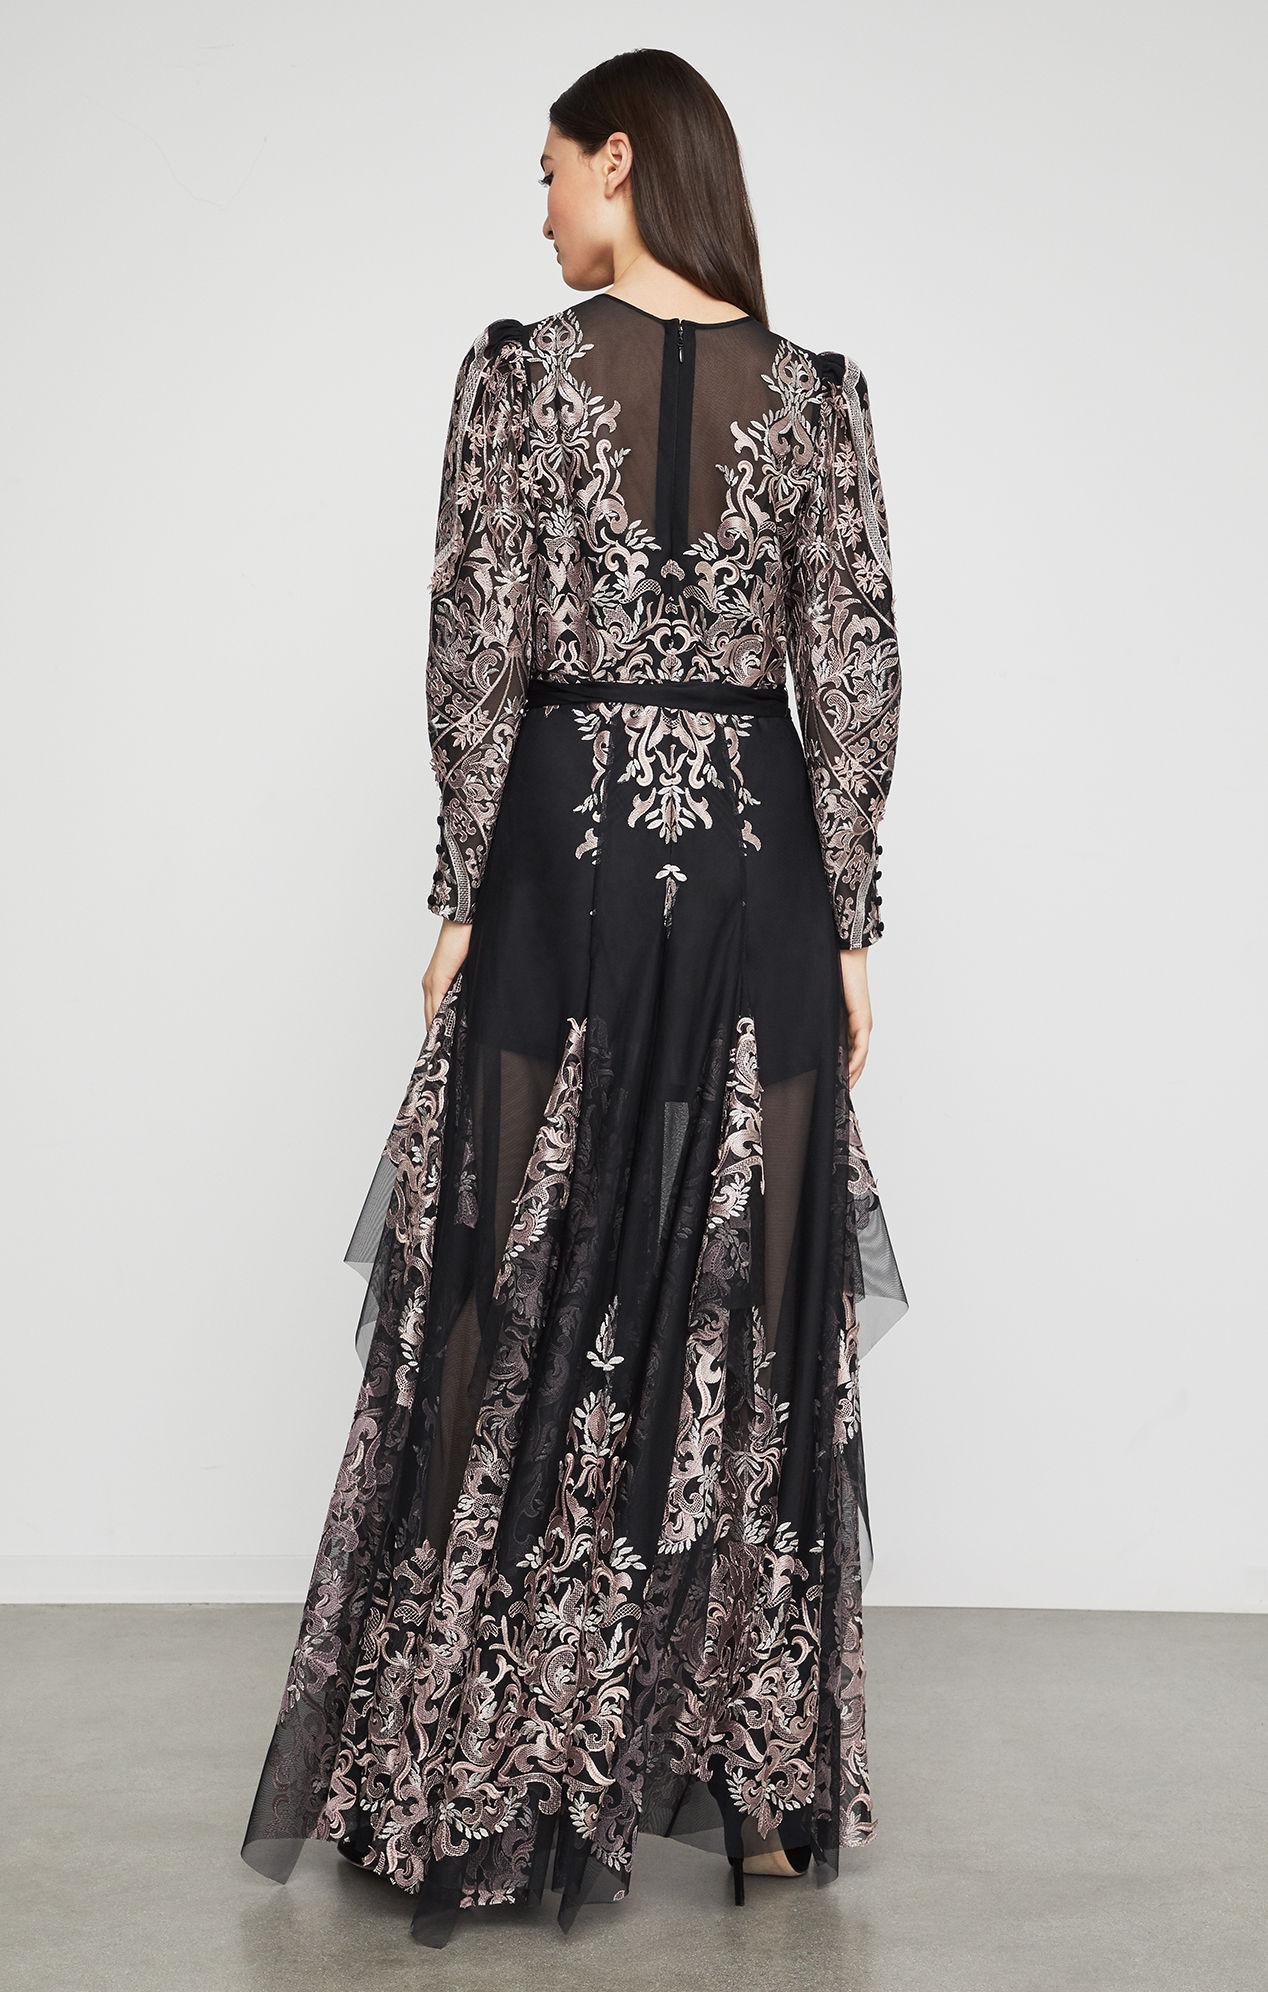 BCBGMAXAZRIA Bcbg Embroidered Tulle Maxi Dress in Black - Lyst